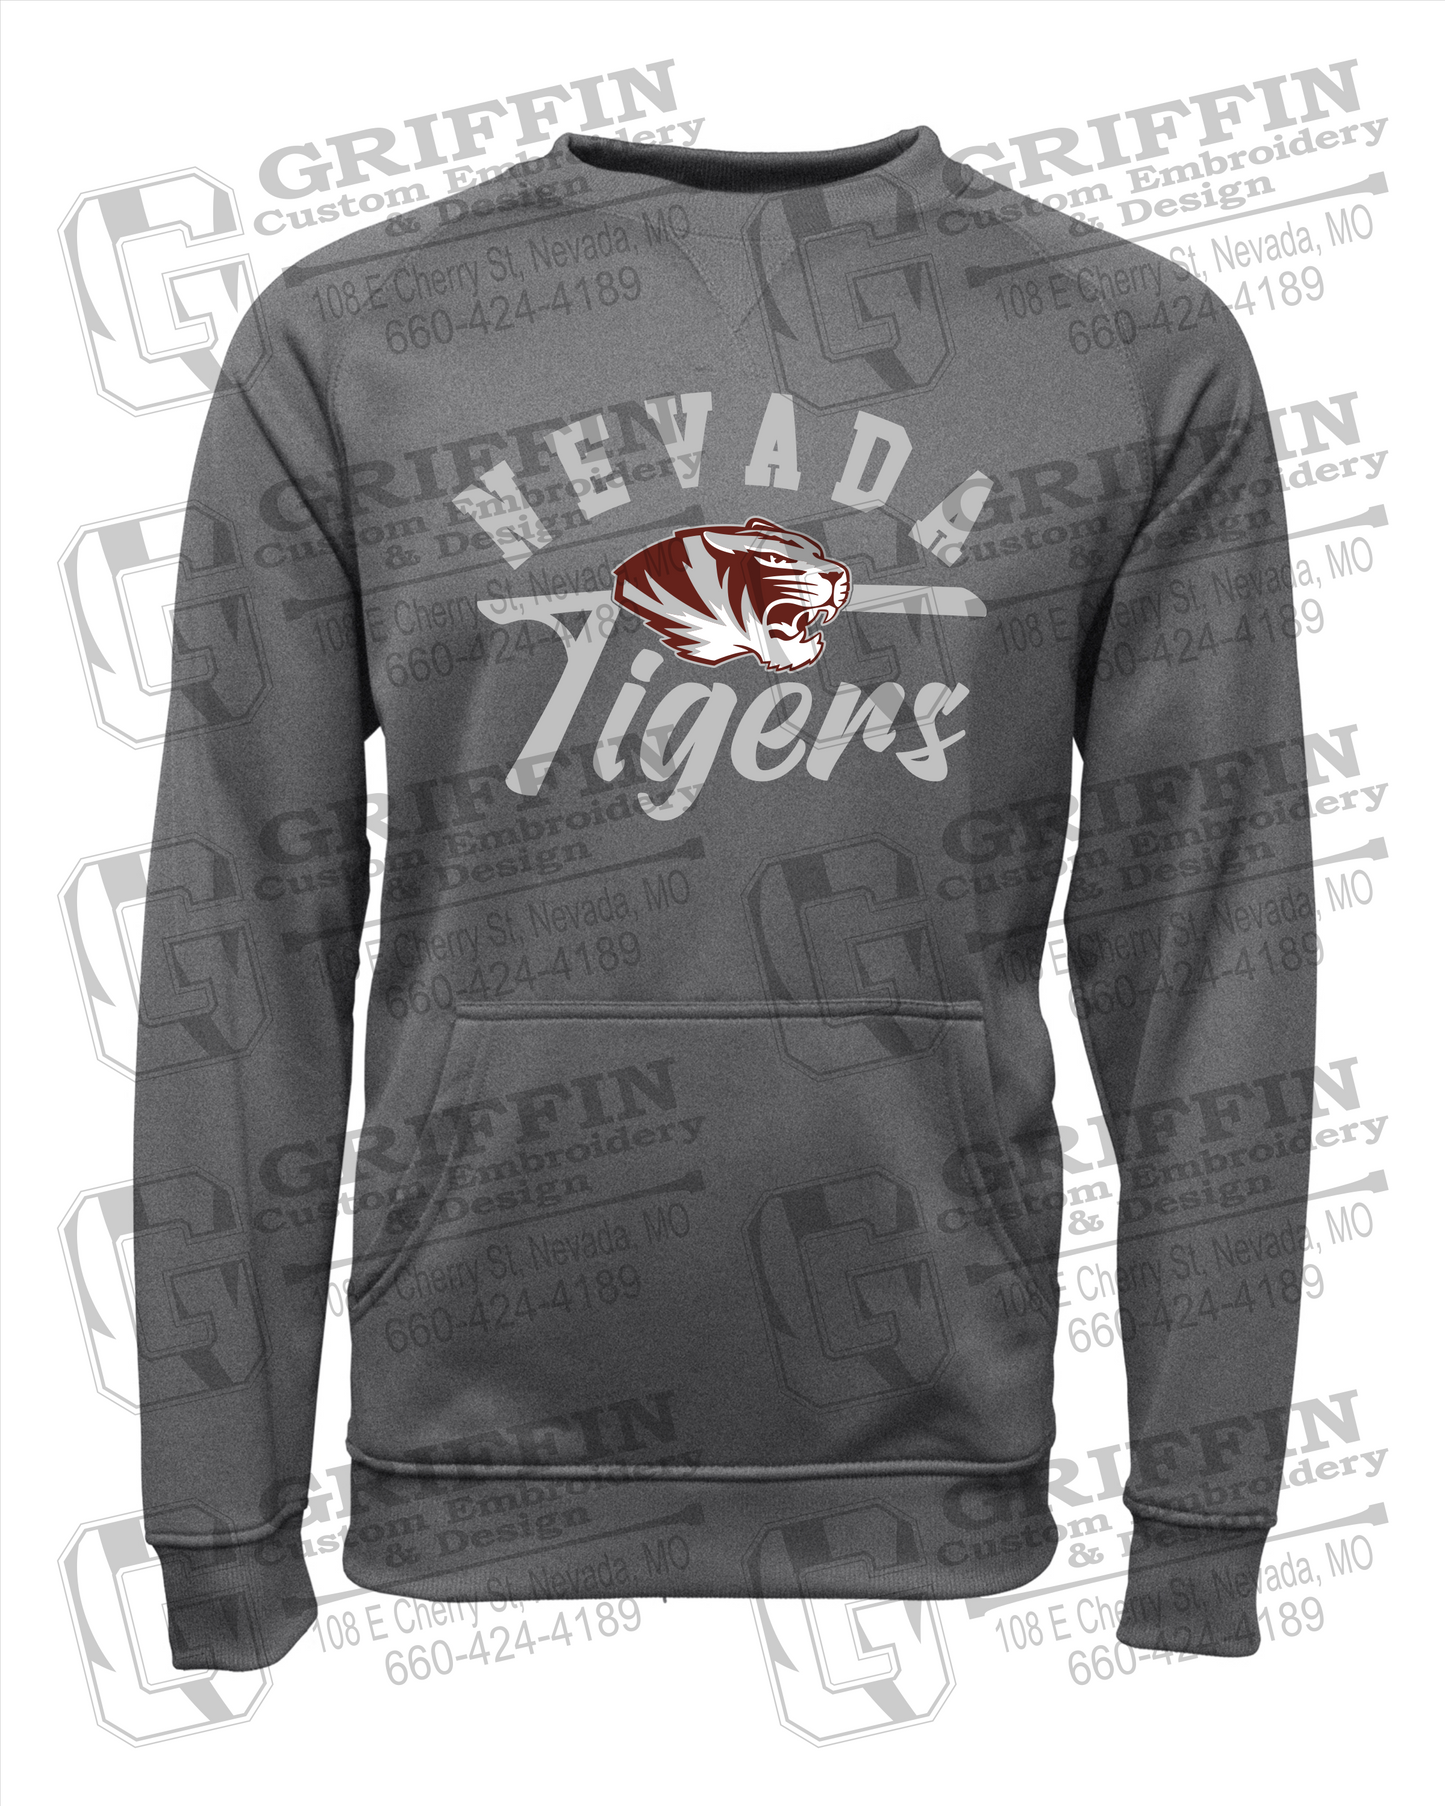 Nevada Tigers 20-Z Youth Sweatshirt